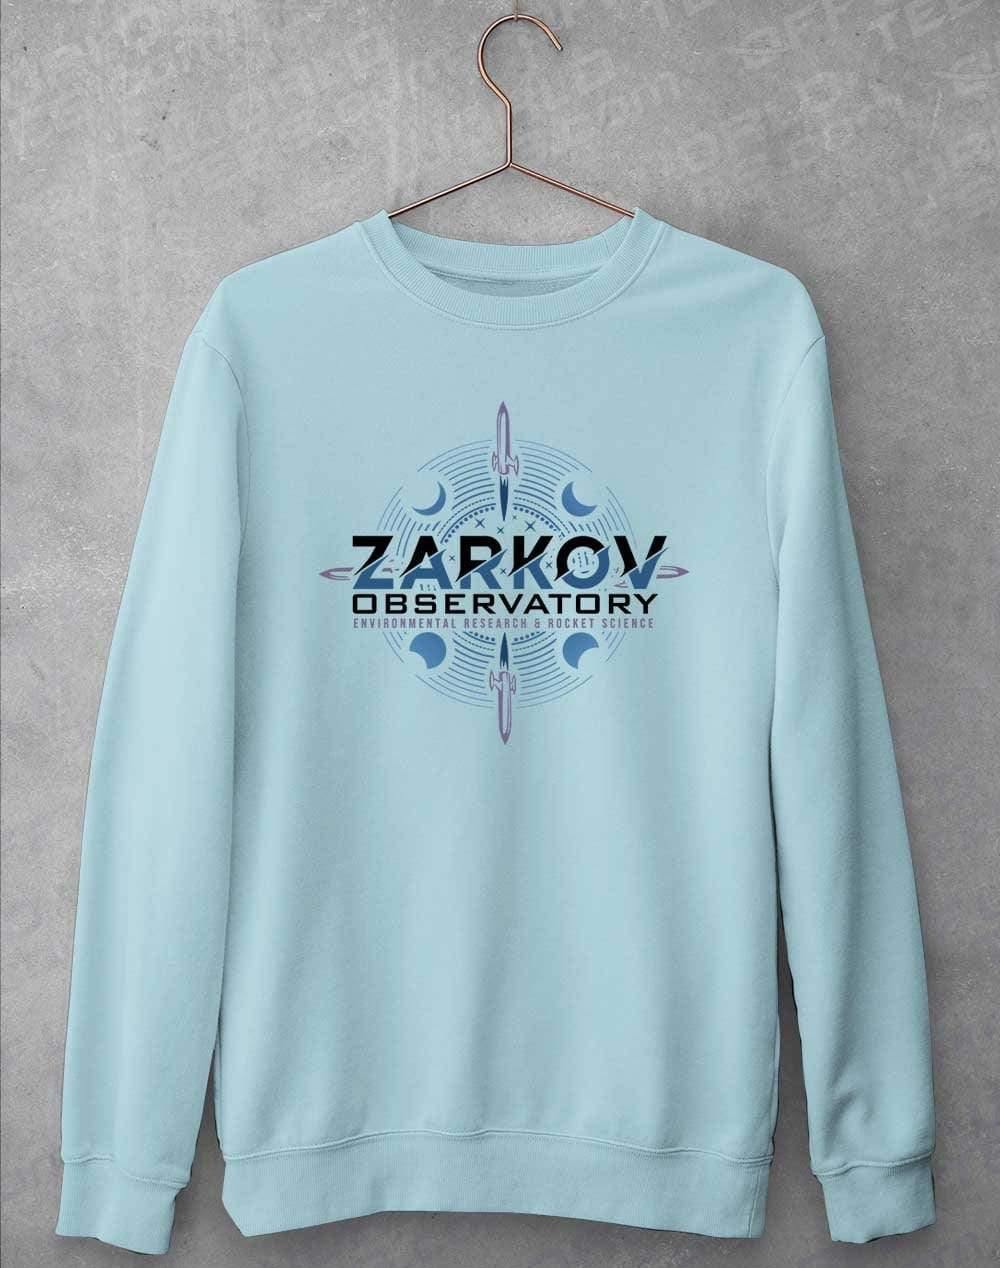 Zarkov Observatory Sweatshirt S / Sky Blue  - Off World Tees